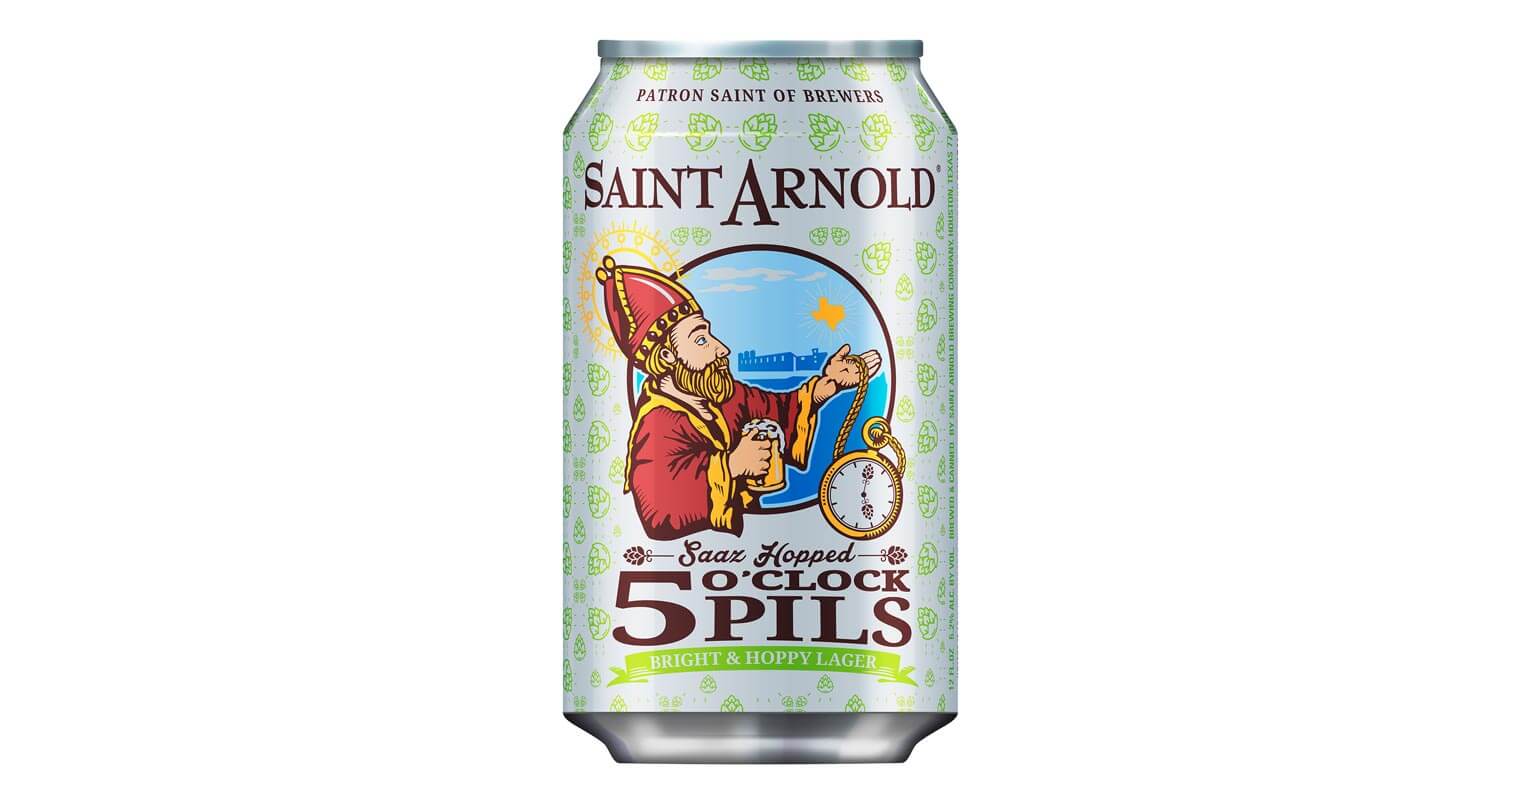 Saint Arnold Introduces 5 O'Clock Pils, beer news, featured image